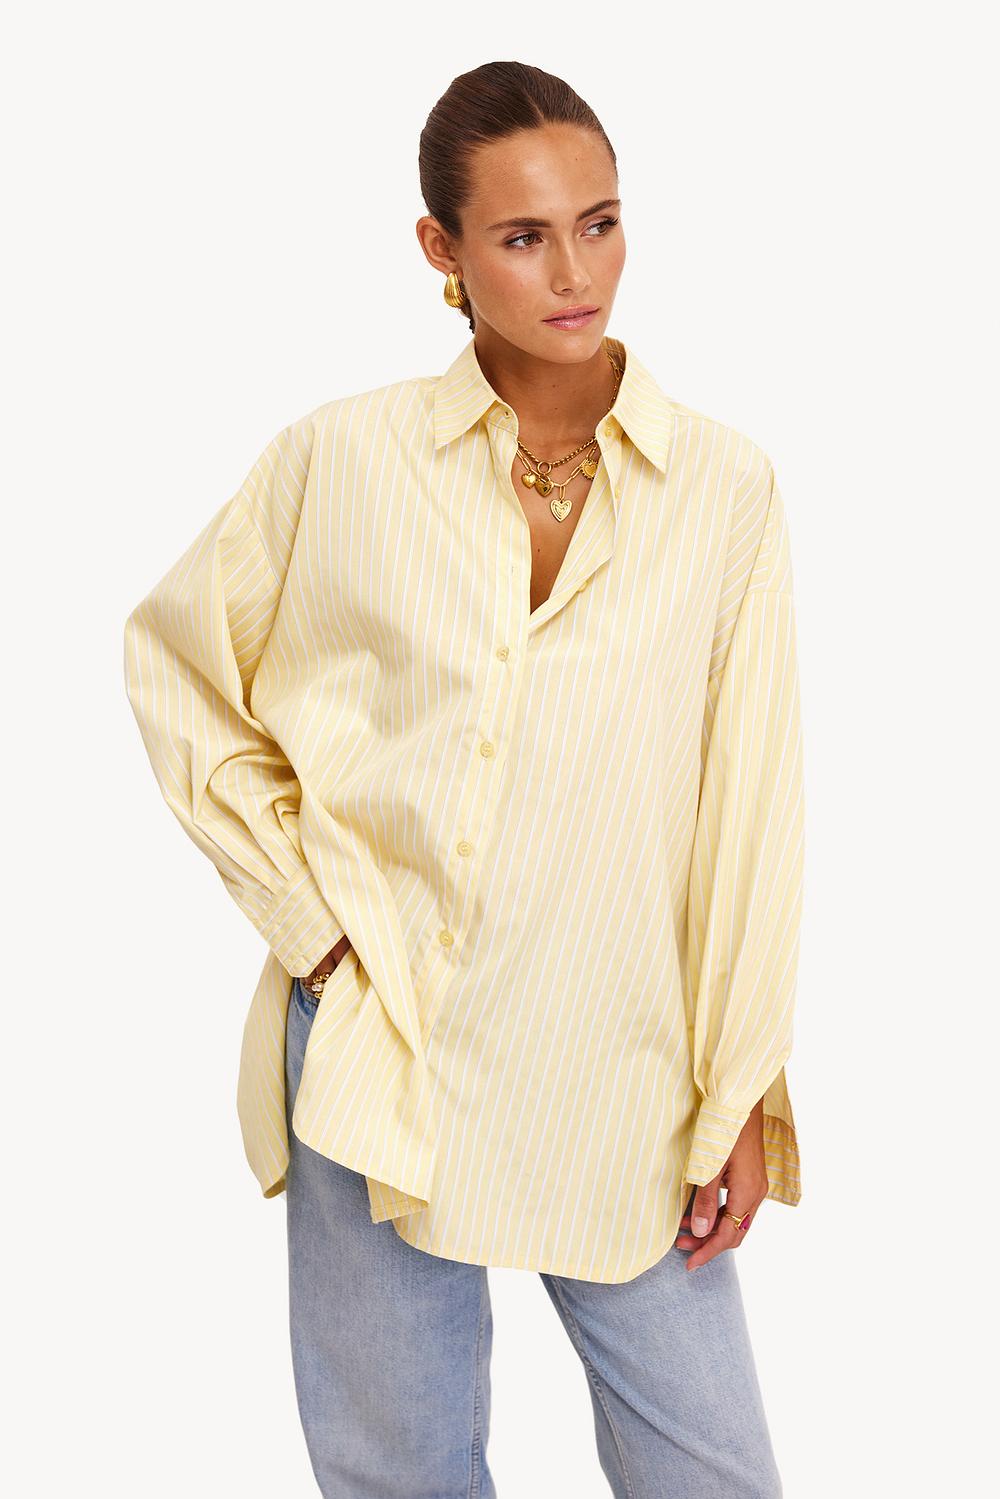 Gele blouse met strepen